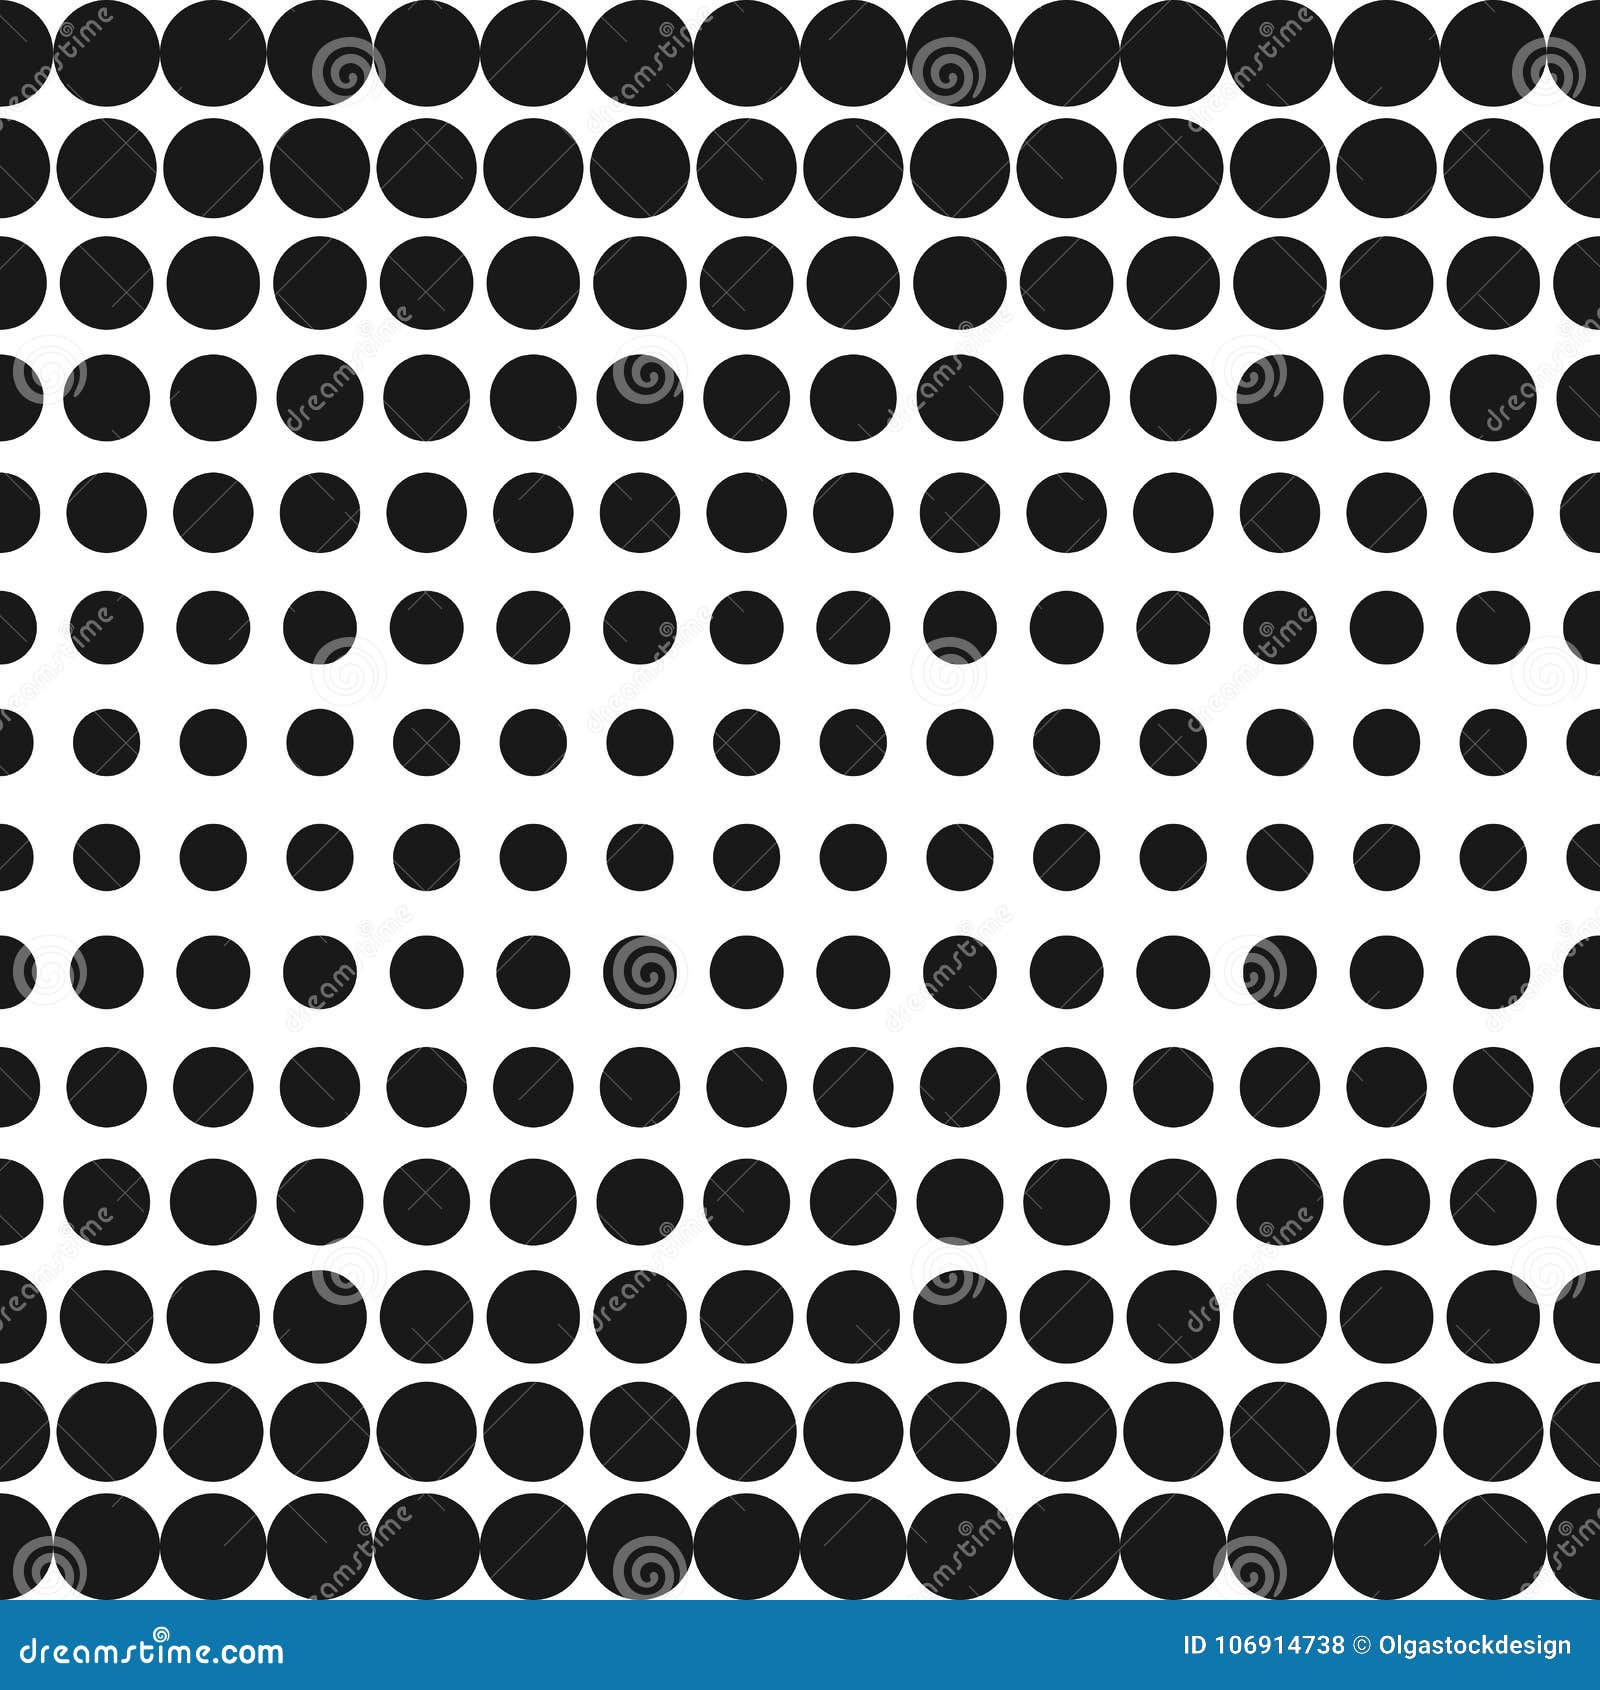 Vector Half Tone Circles Pattern. Halftone Dots Background. Stock ...